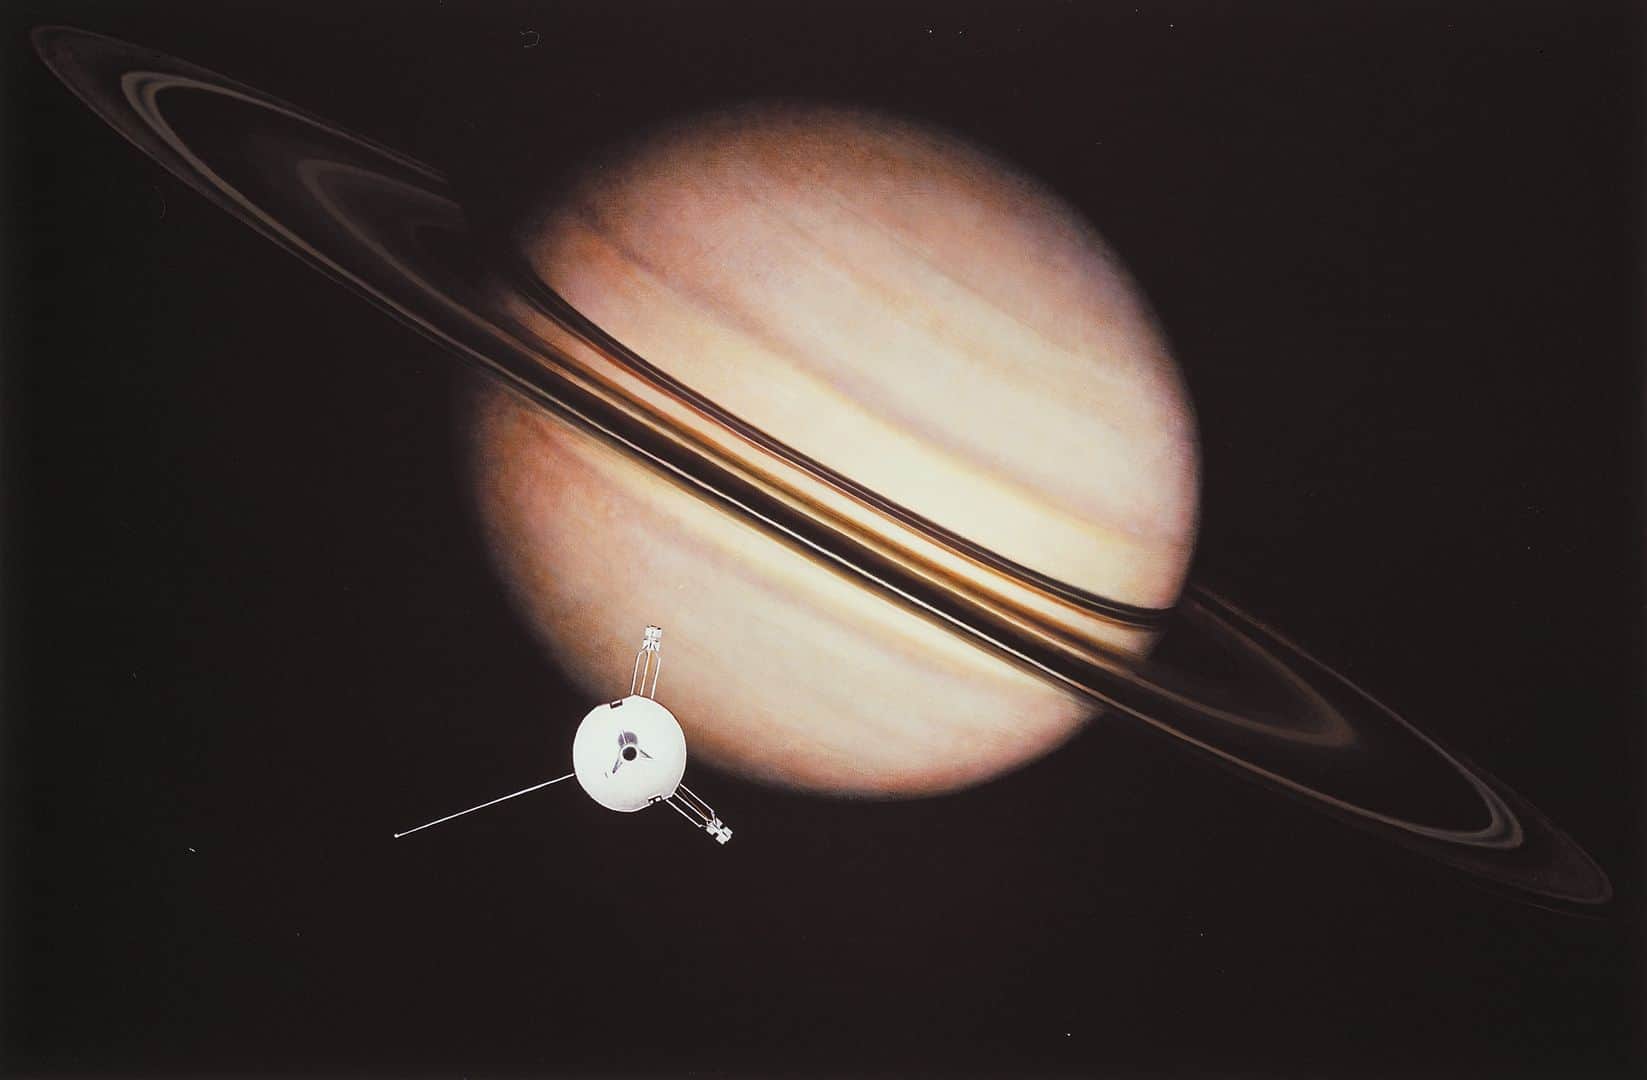 feiten over Saturnus, Pioneer 11